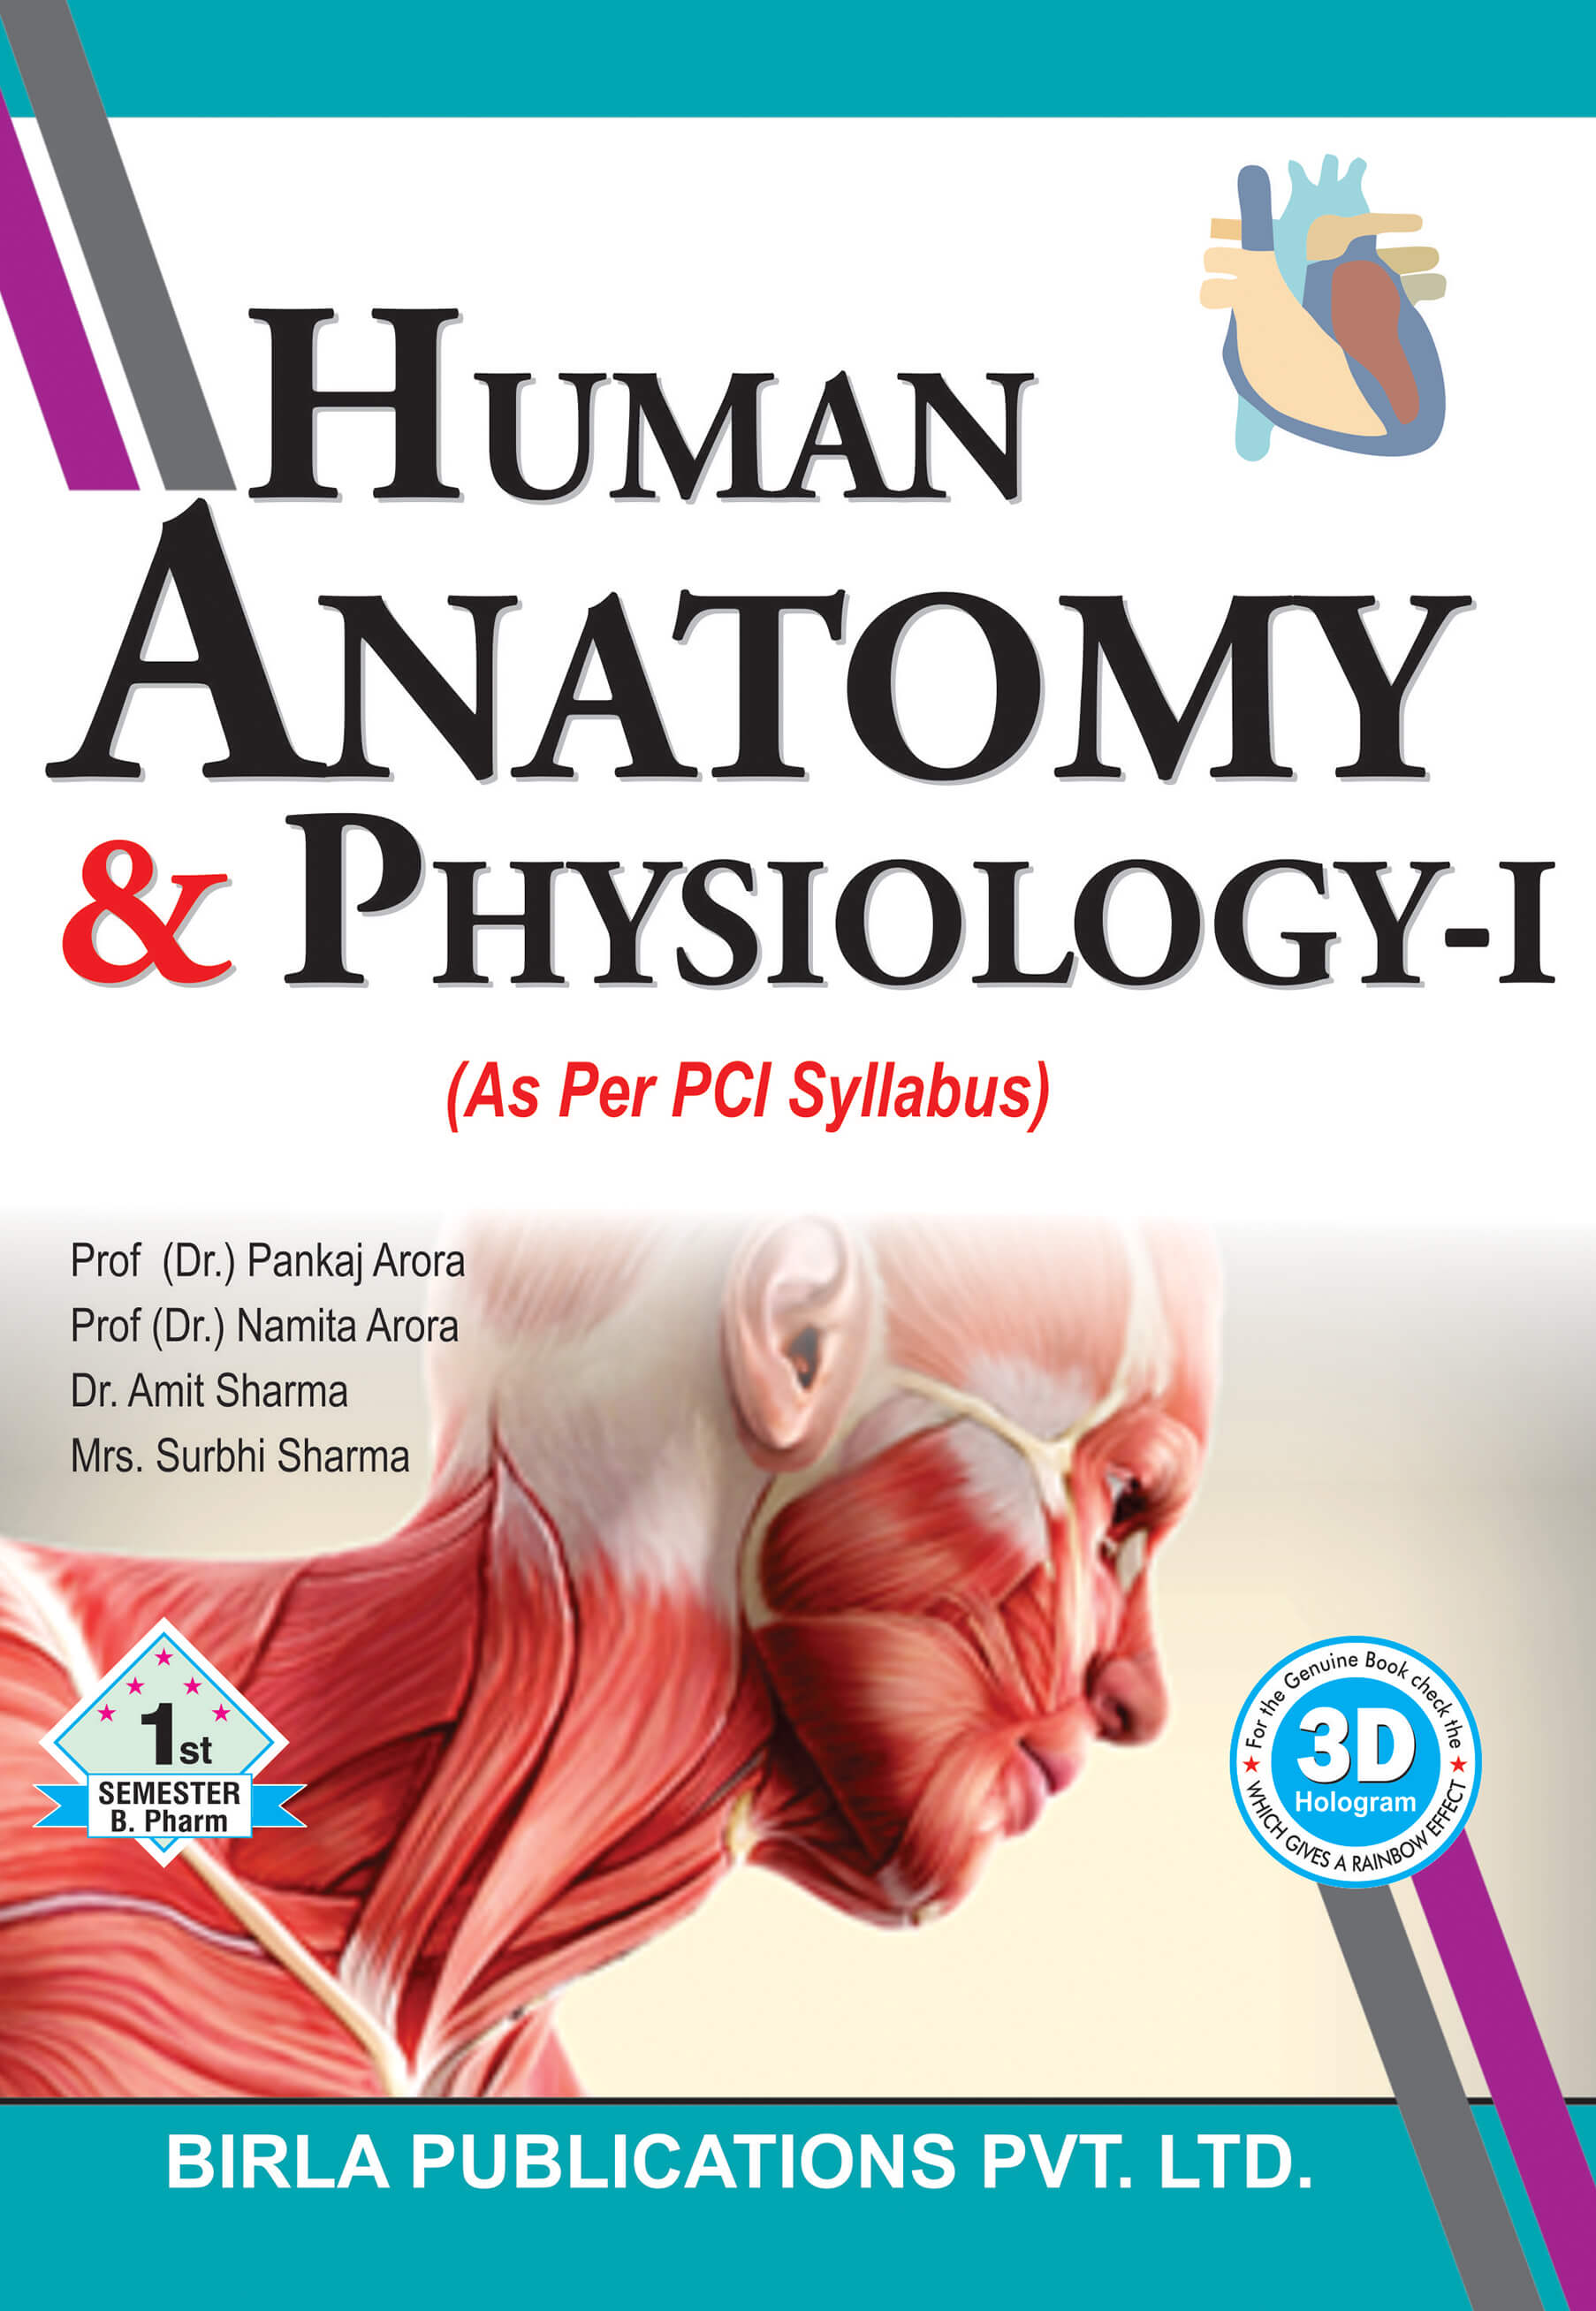 HUMAN ANATOMY & PHYSIOLOGY-I